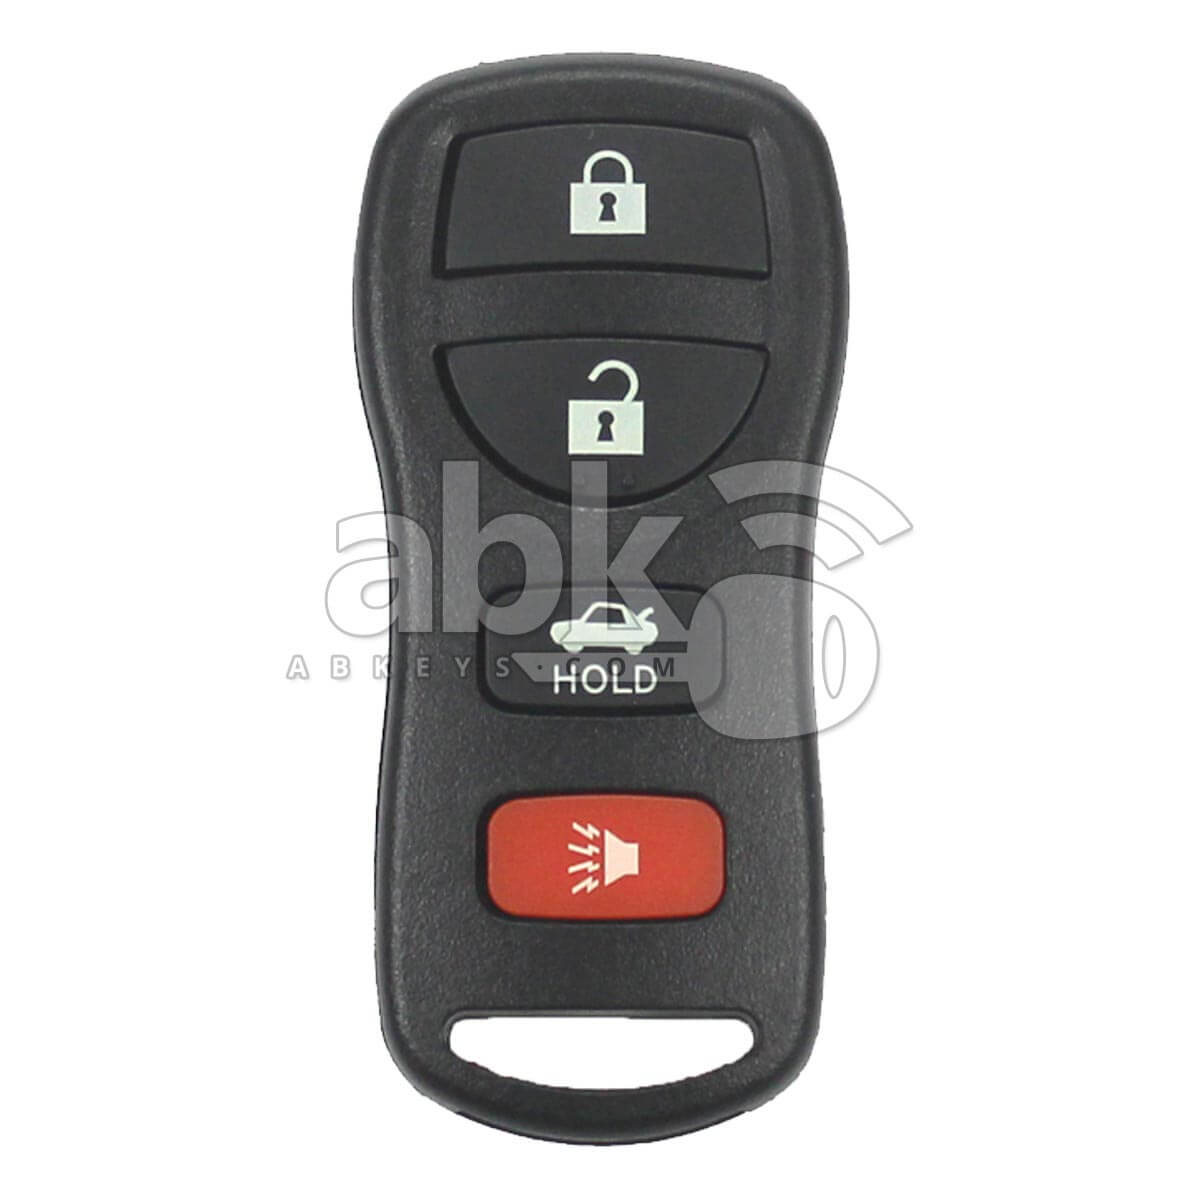 Xhorse VVDI Key Tool VVDI2 Nissan Style Wired Remote Control 4Buttons XKNI00EN - ABK-1015-XKNI00EN -